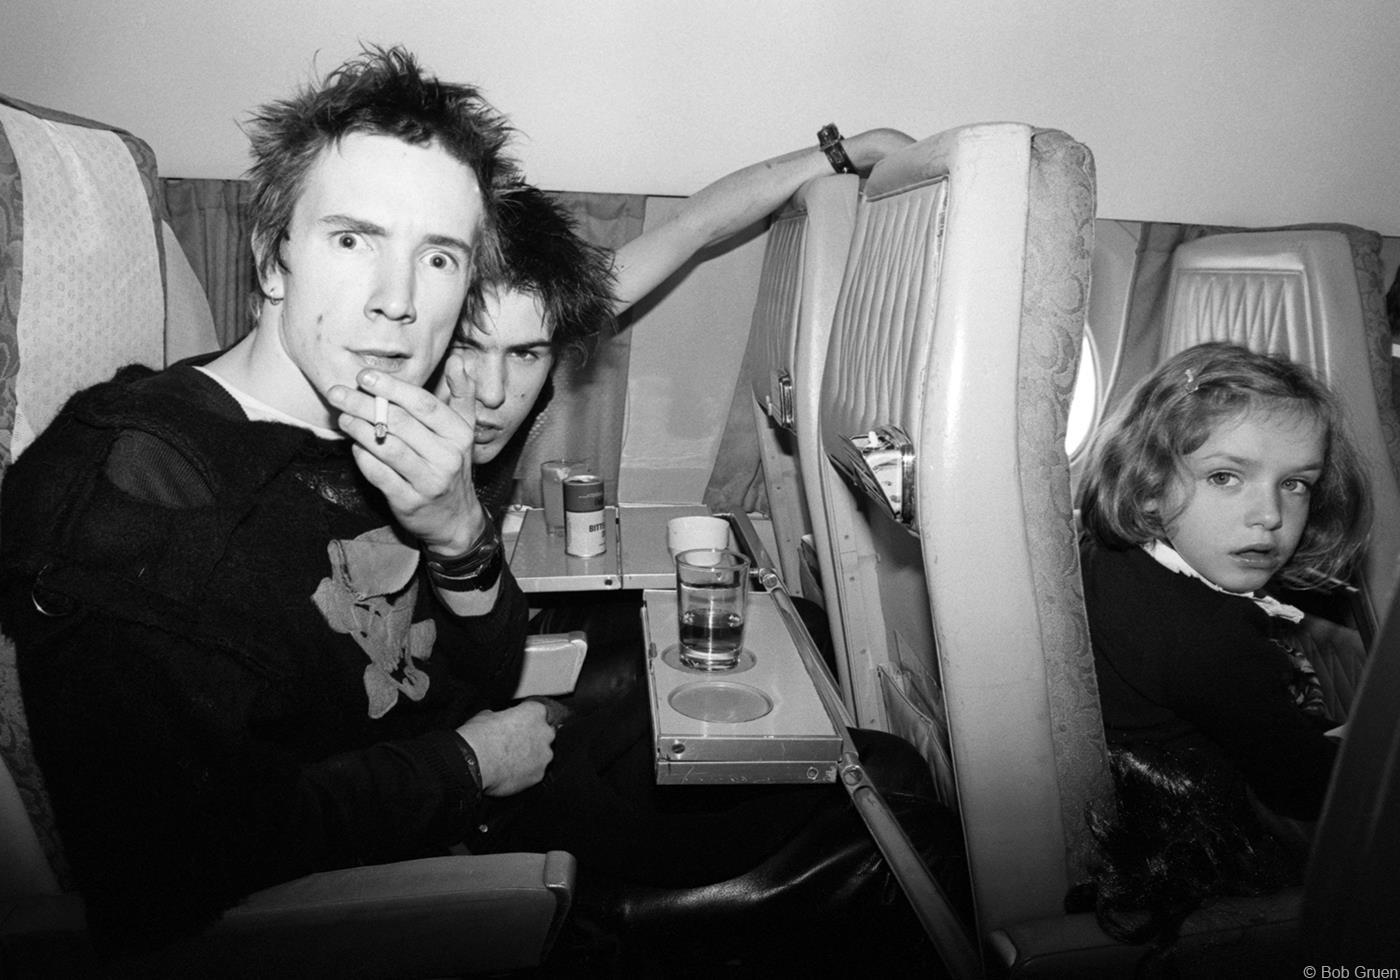 Bob Gruen Black and White Photograph - Johnny Rotten & Sid Vicious, Europe 1977